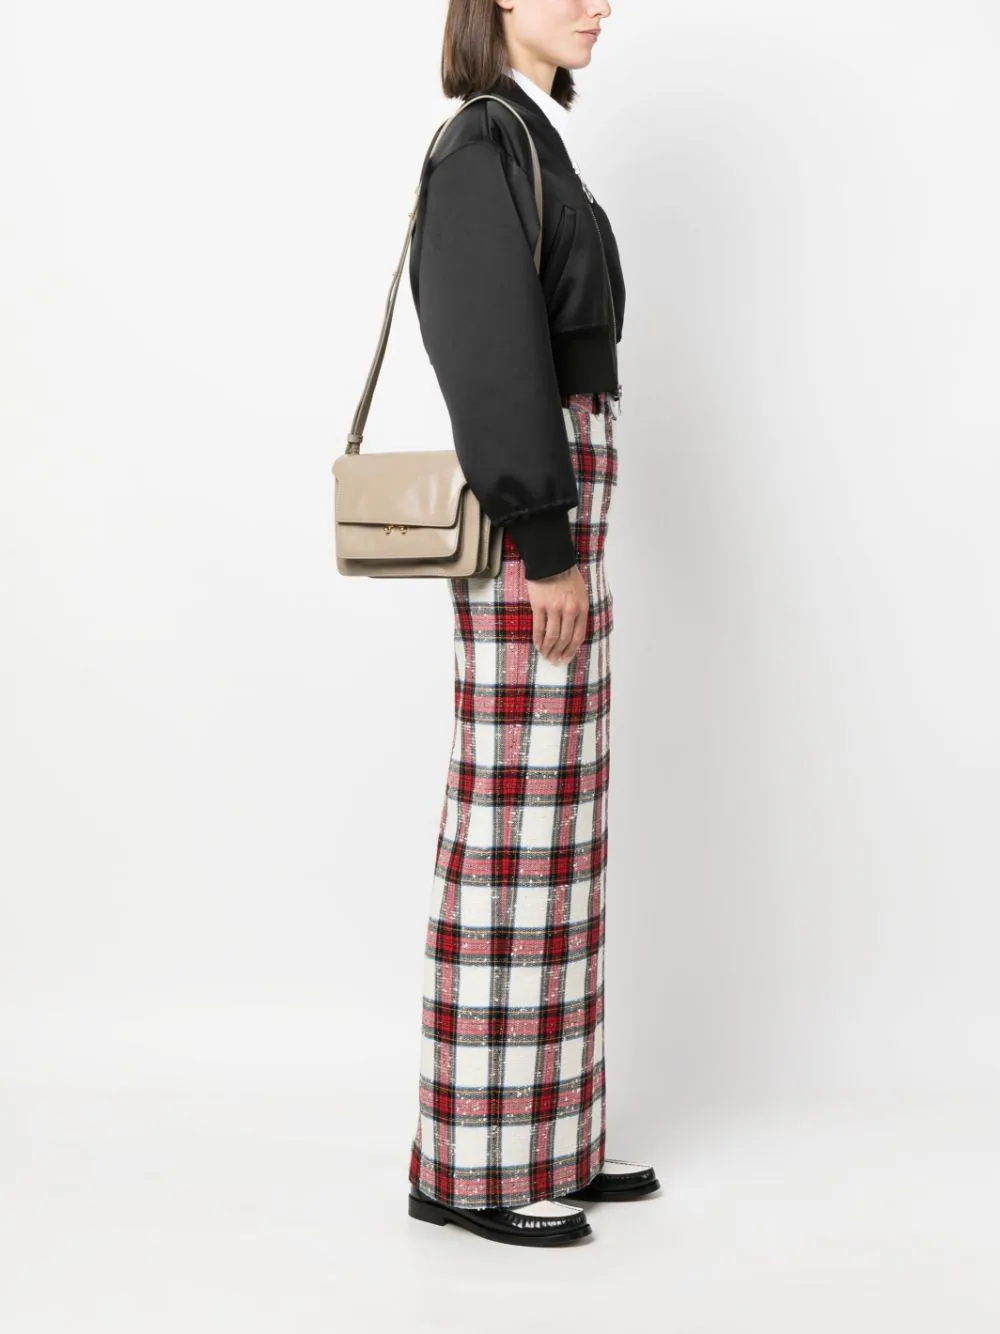 Women's Medium Trunk Soft Bag by Marni